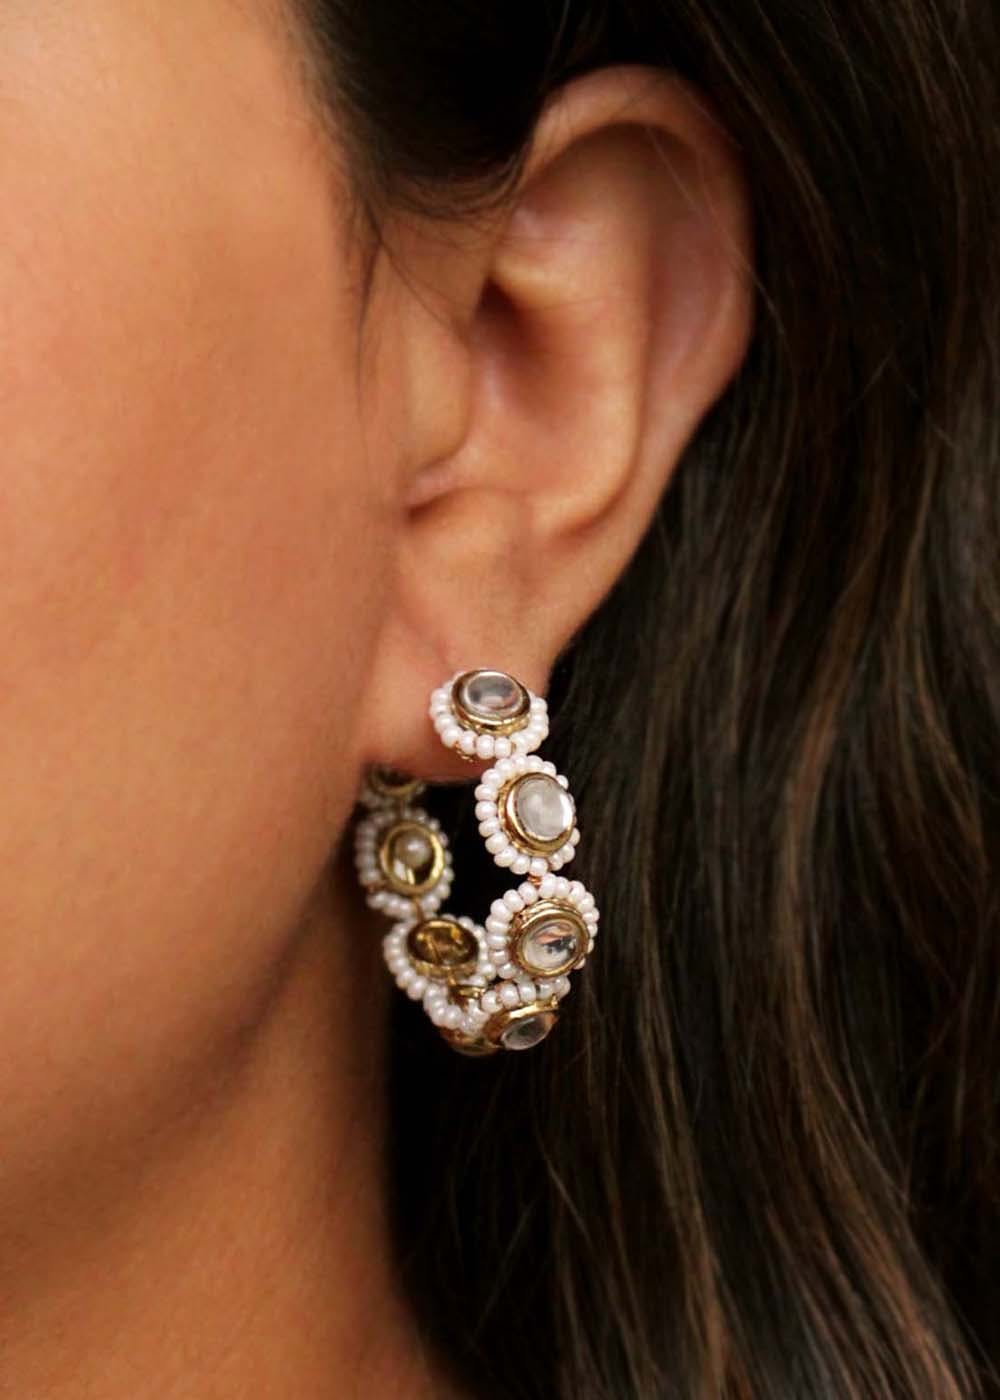 Silver Hoop Earrings Online India  Big and Small Hoop Earrings for Women   FOURSEVEN